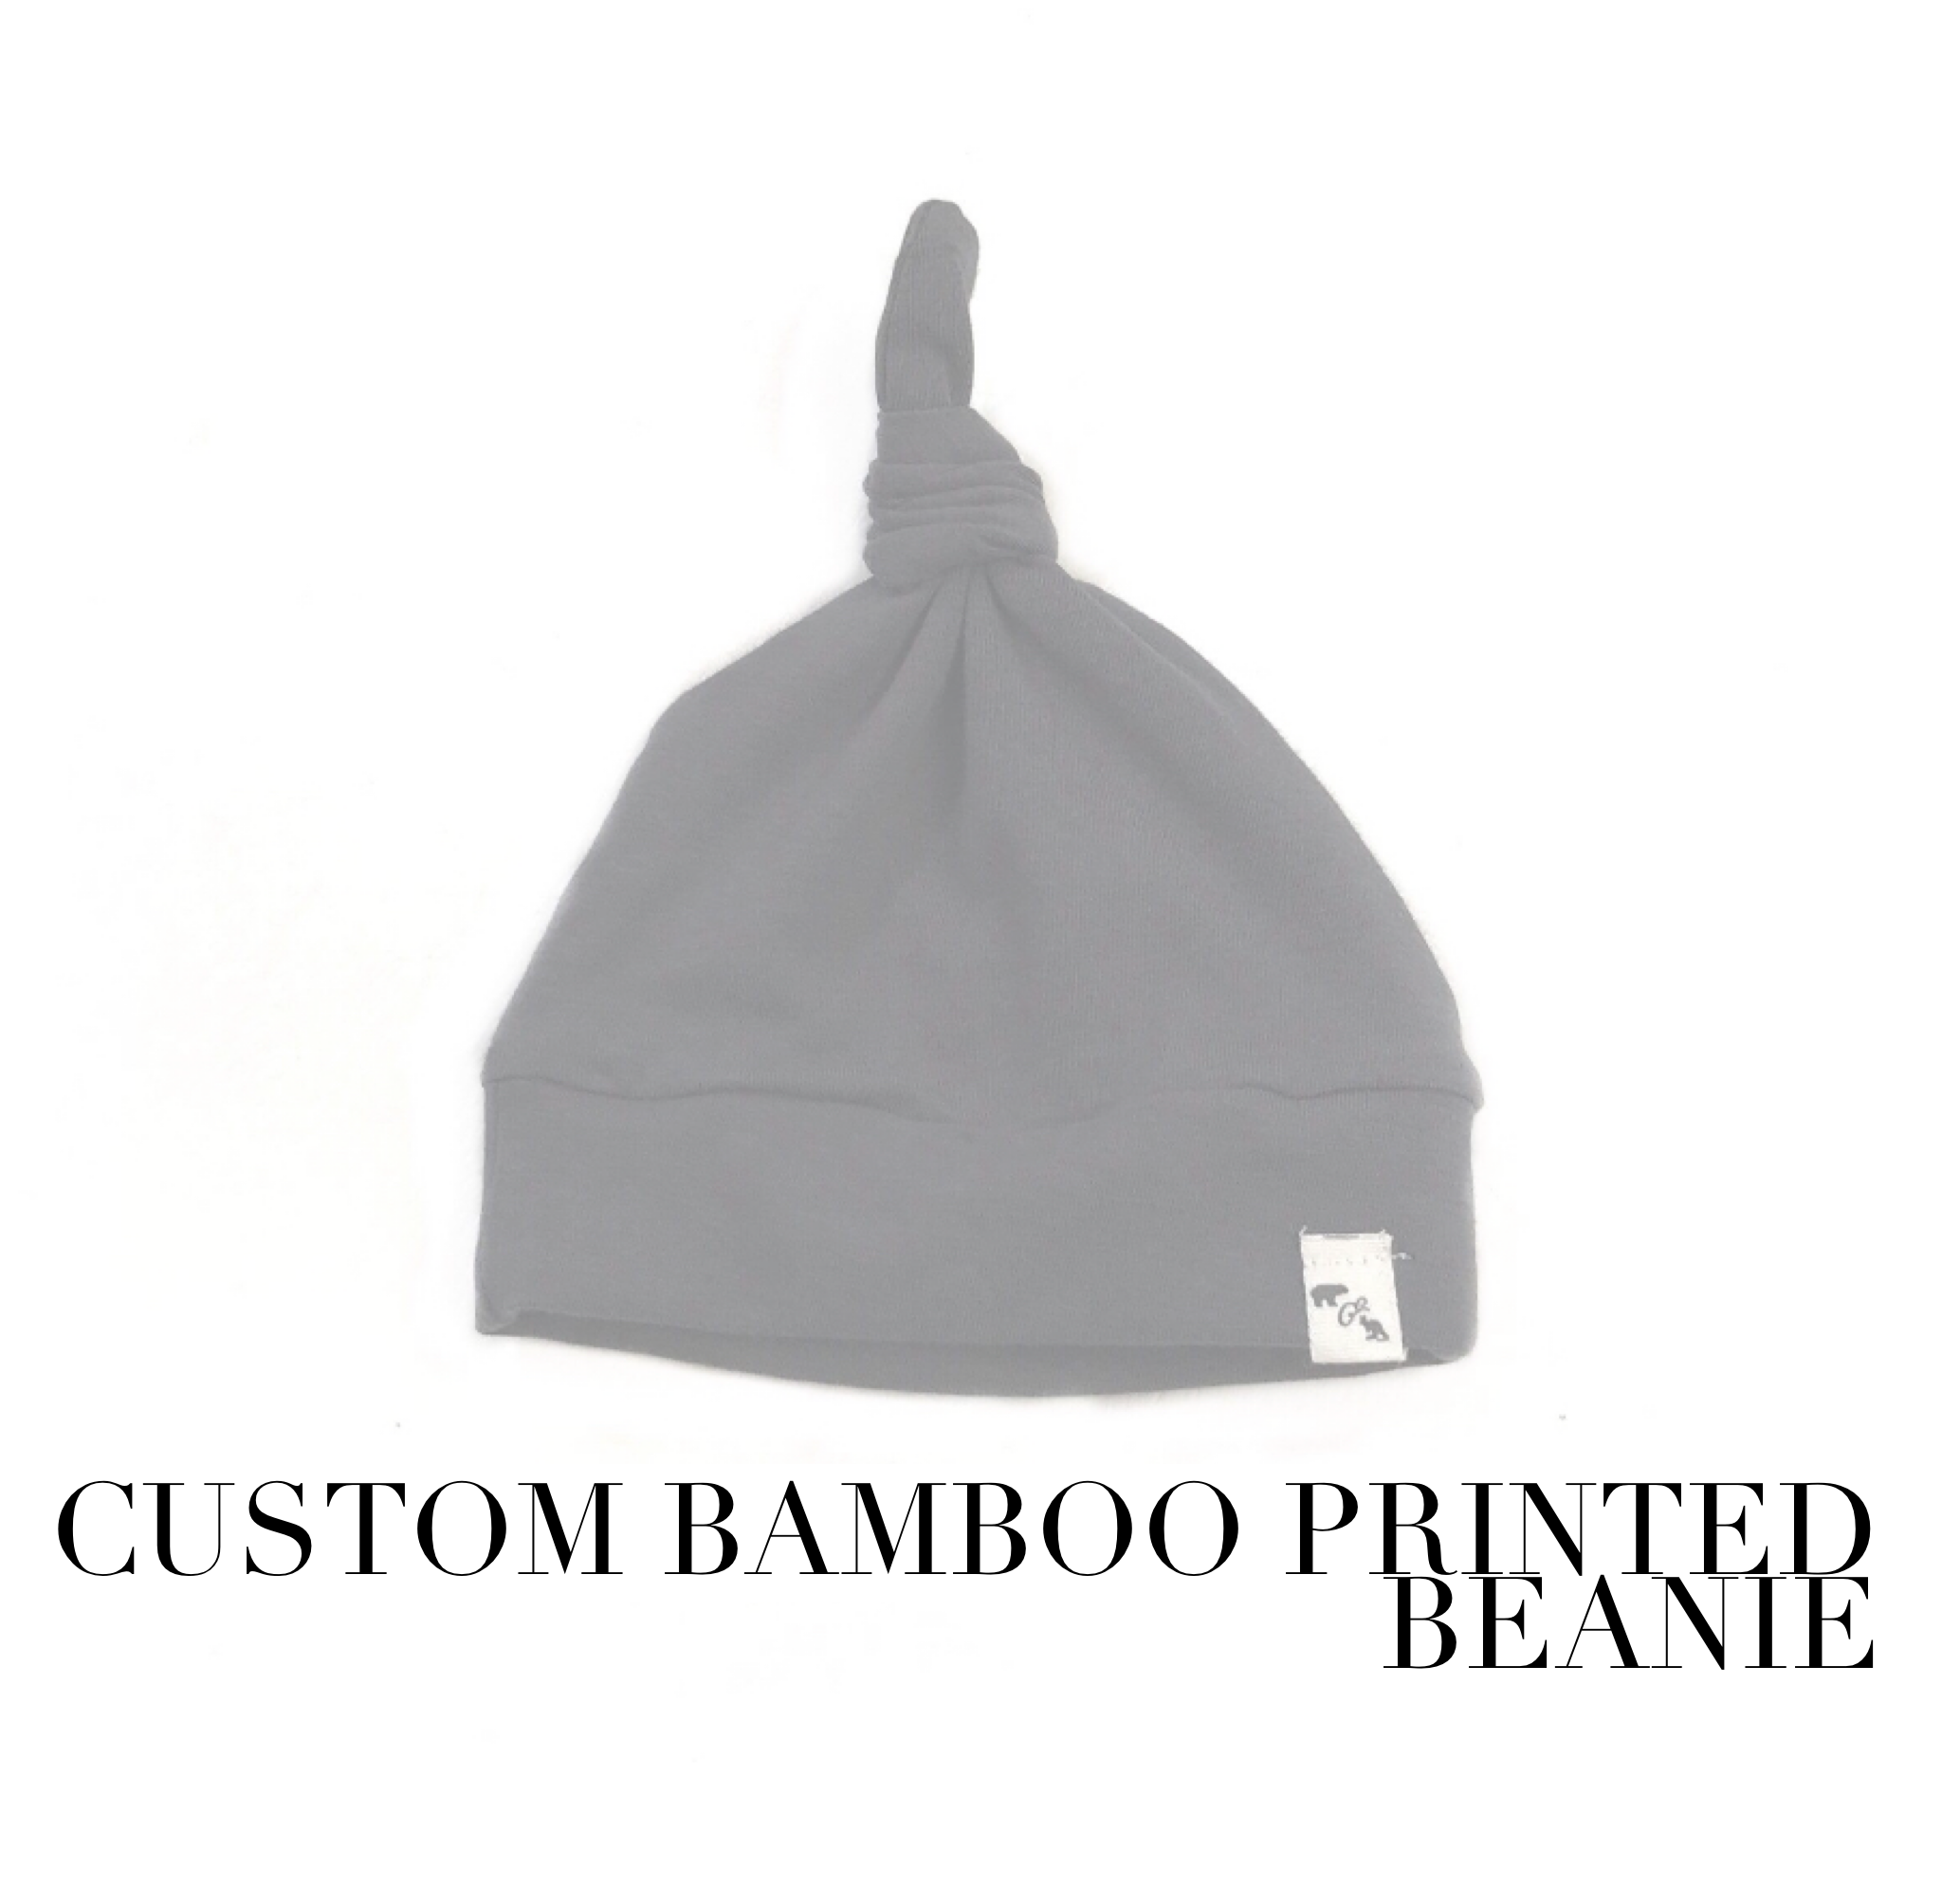 Custom printed bamboo - Knotted Beanie